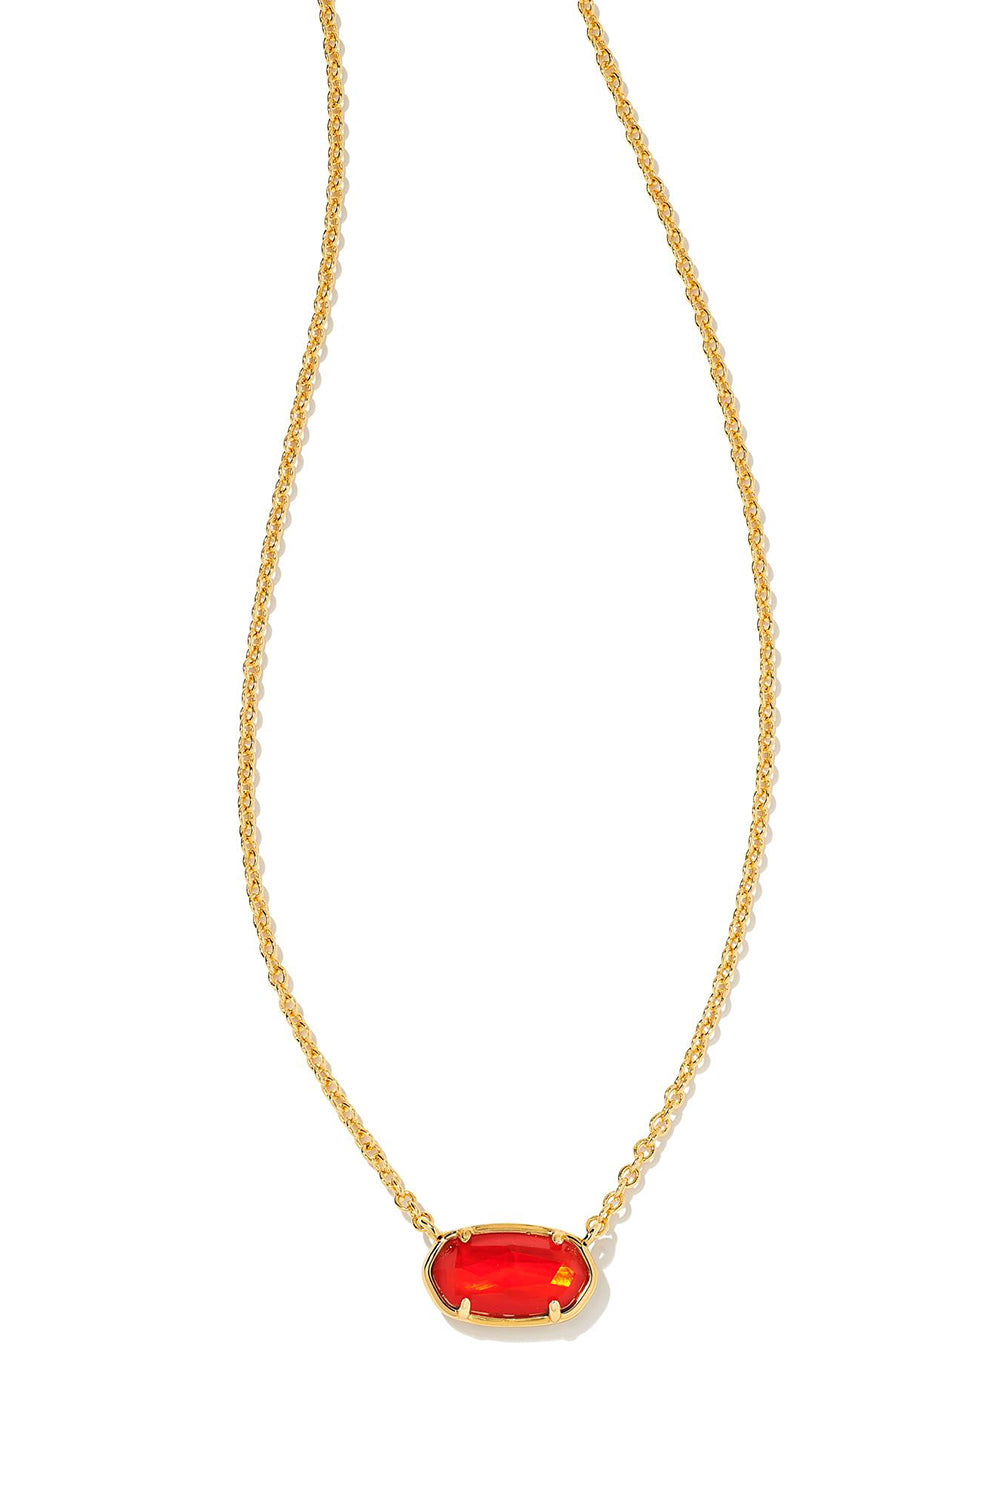 Kendra Scott Grayson Short Pendant Necklace Gold Ivory Mothe | Steve Lennon  & Co Jewelers | New Hartford, NY